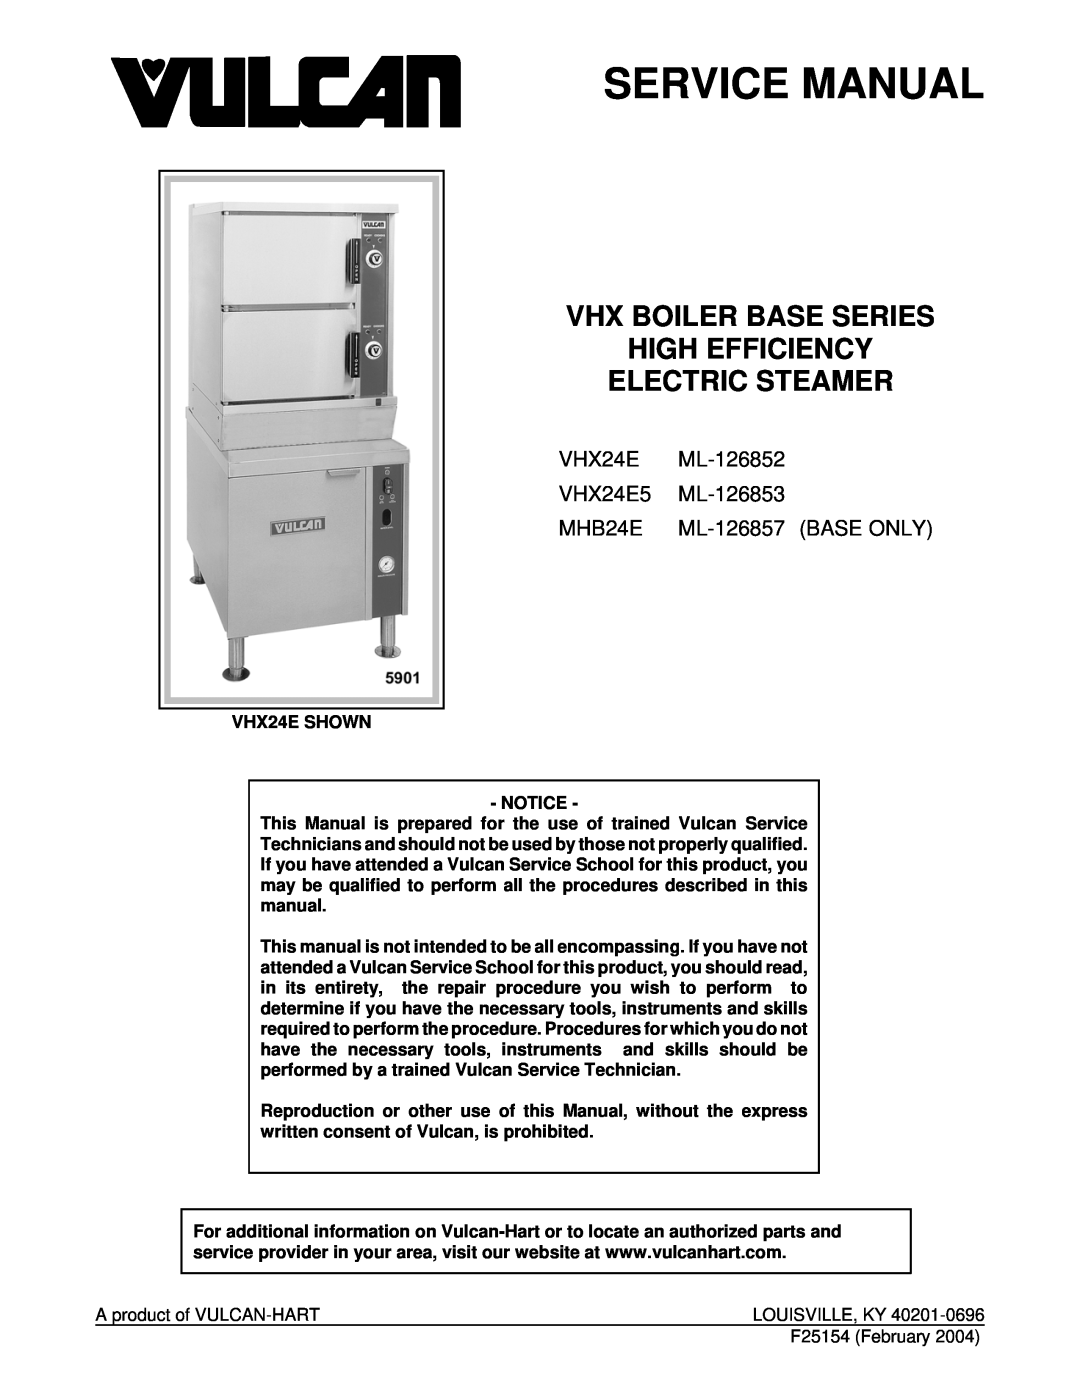 Vulcan-Hart ML-126853, ML-126857 manual Vhx Boiler Base Series High Efficiency, Electric Steamer, VHX24E SHOWN NOTICE 